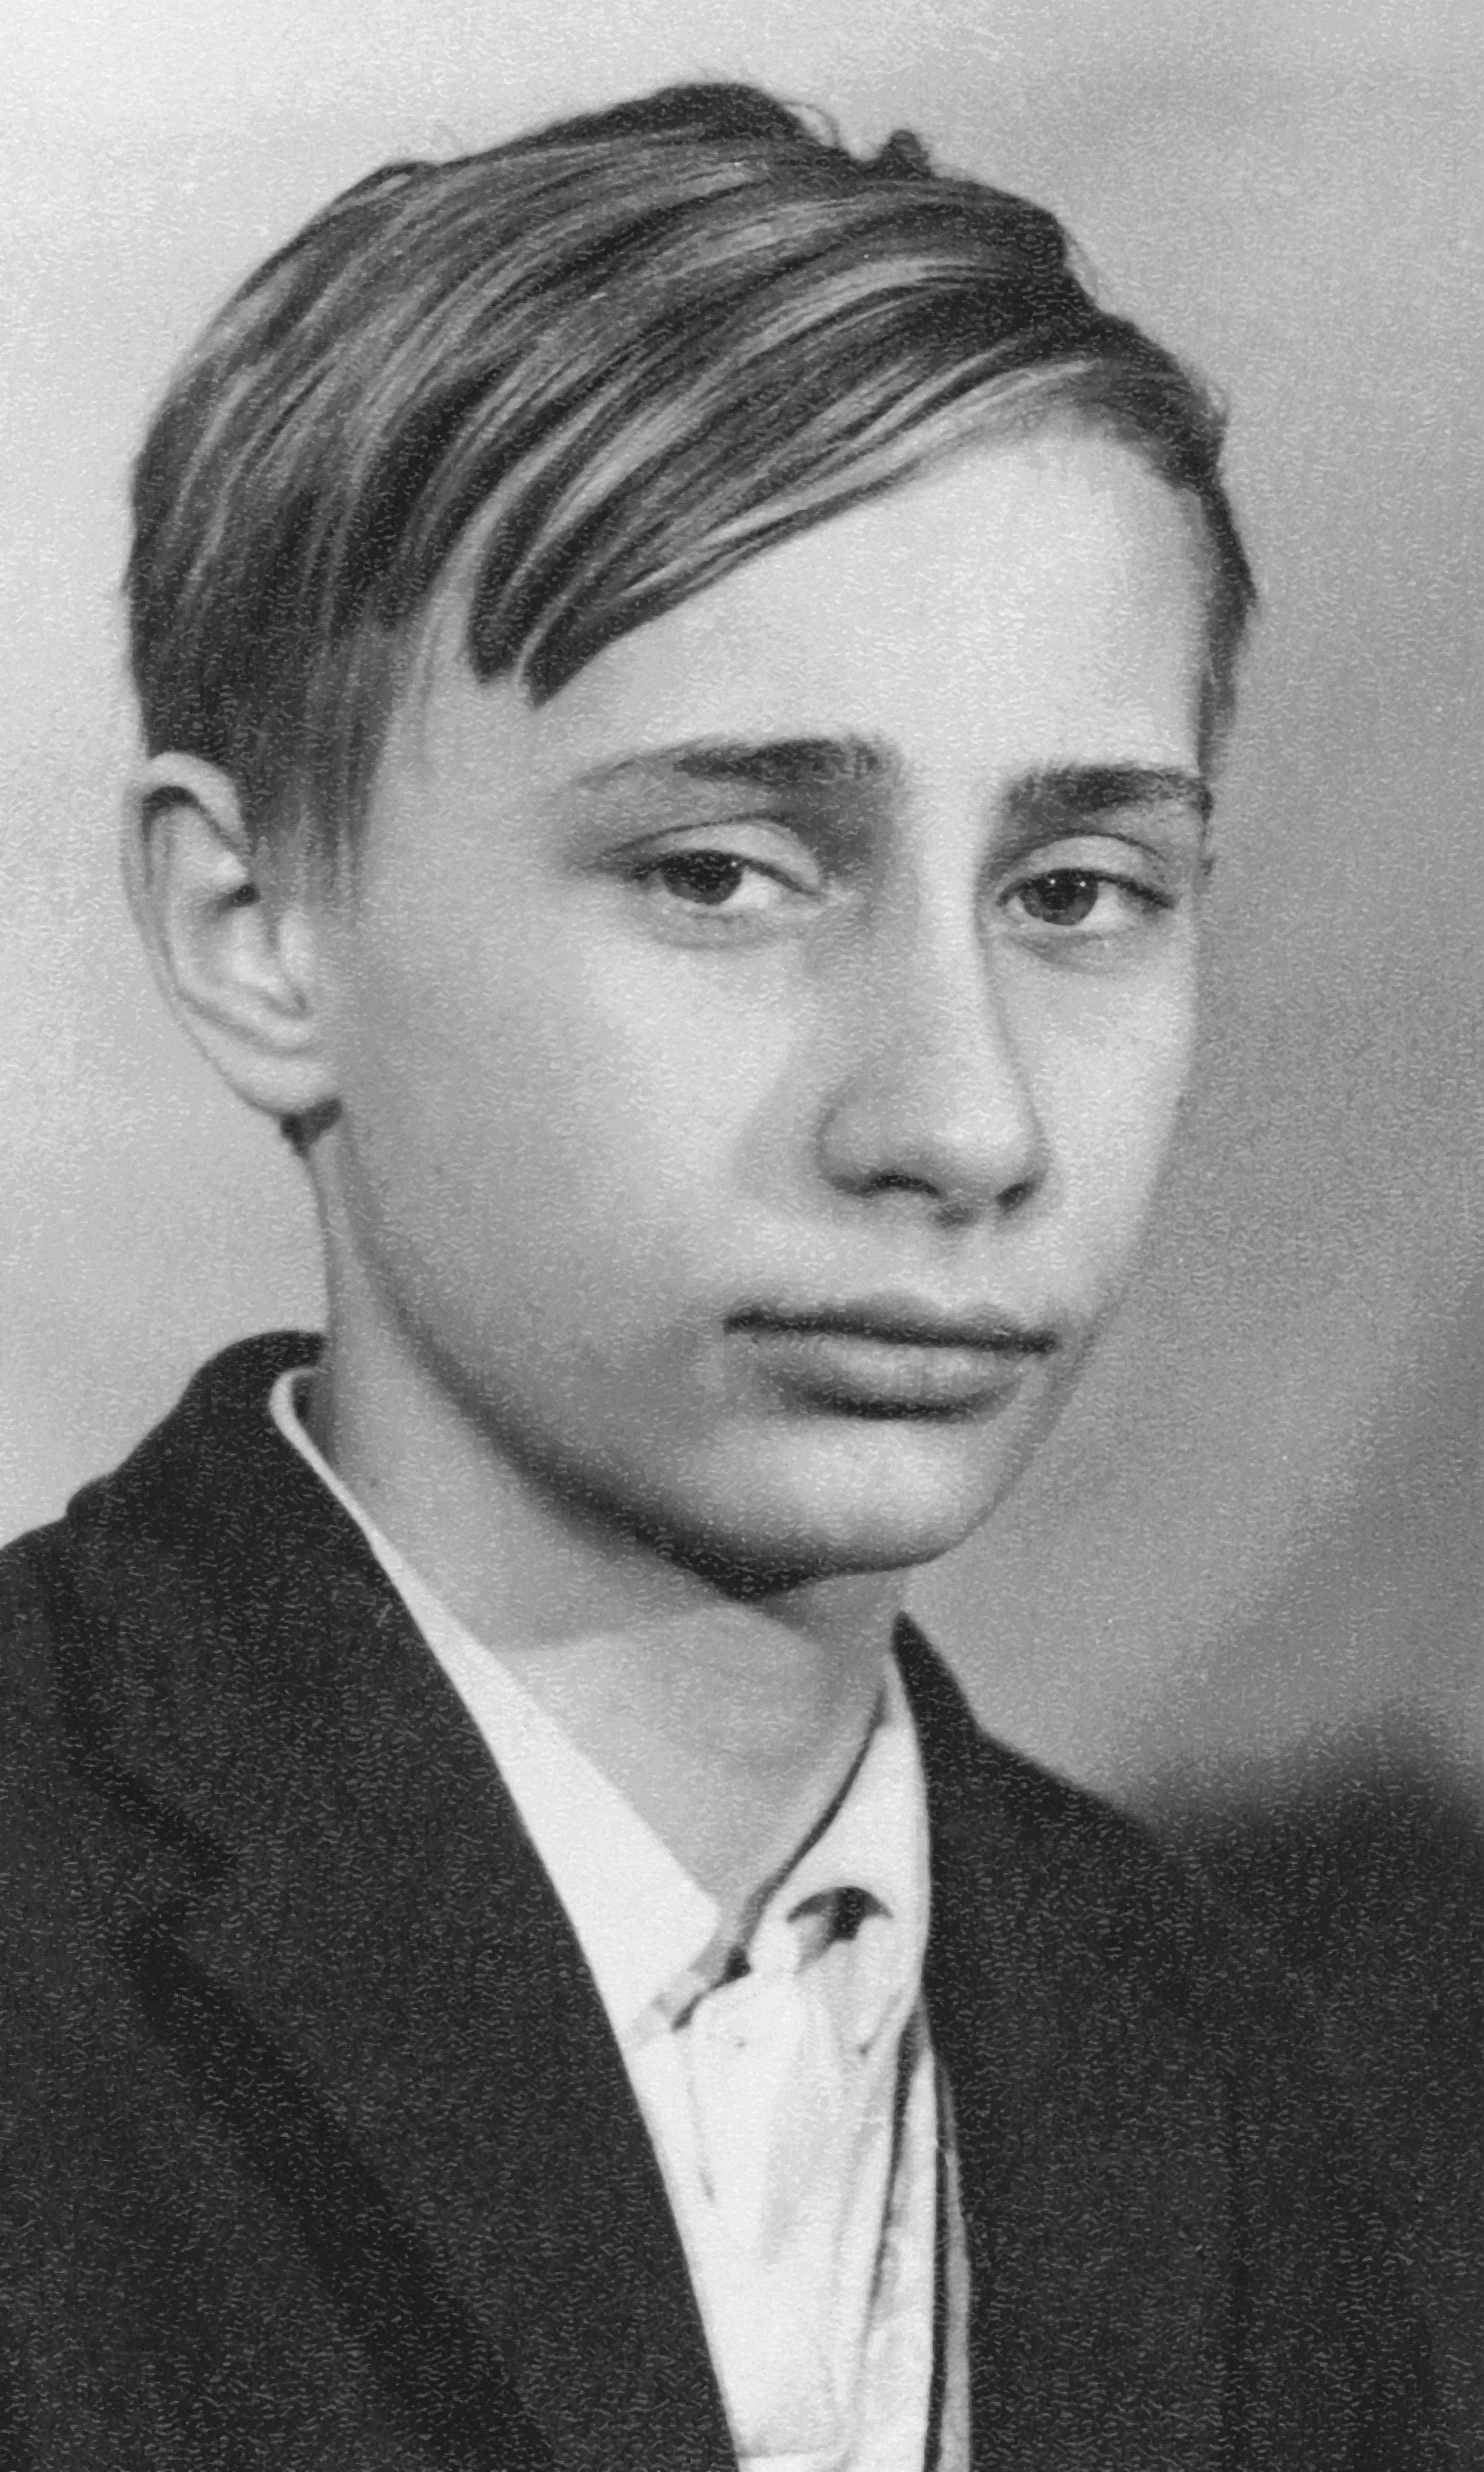 Vladimir_Putin_as_a_child.jpg